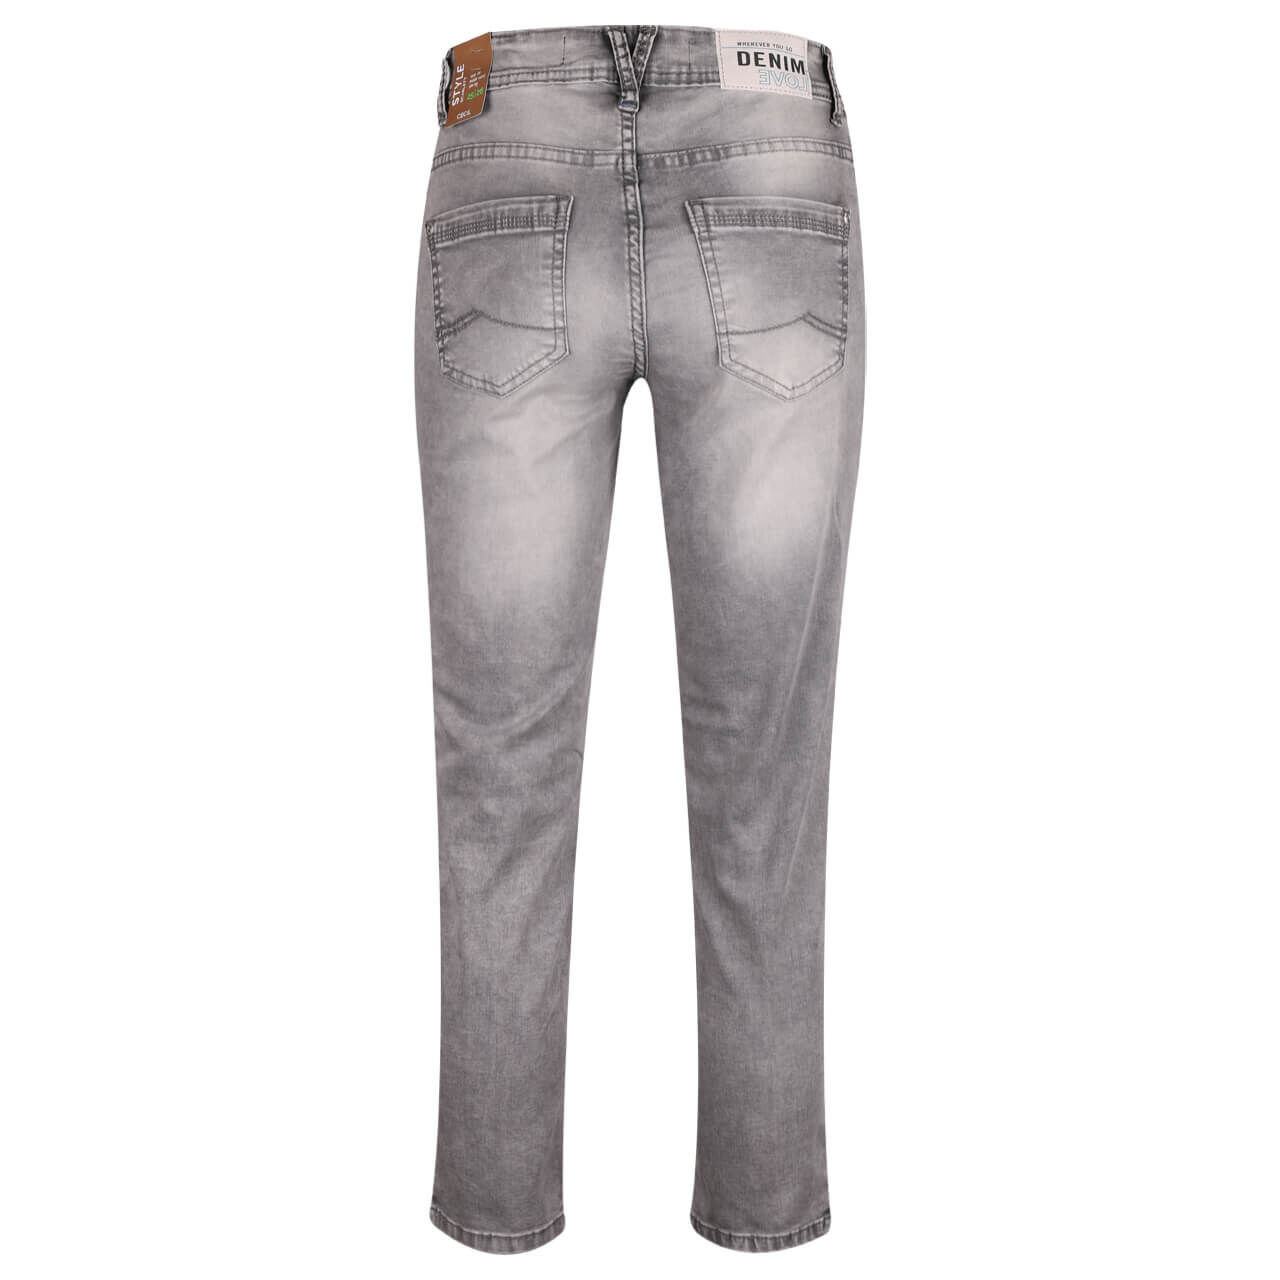 Cecil Scarlett 7/8 Jeans grey washed